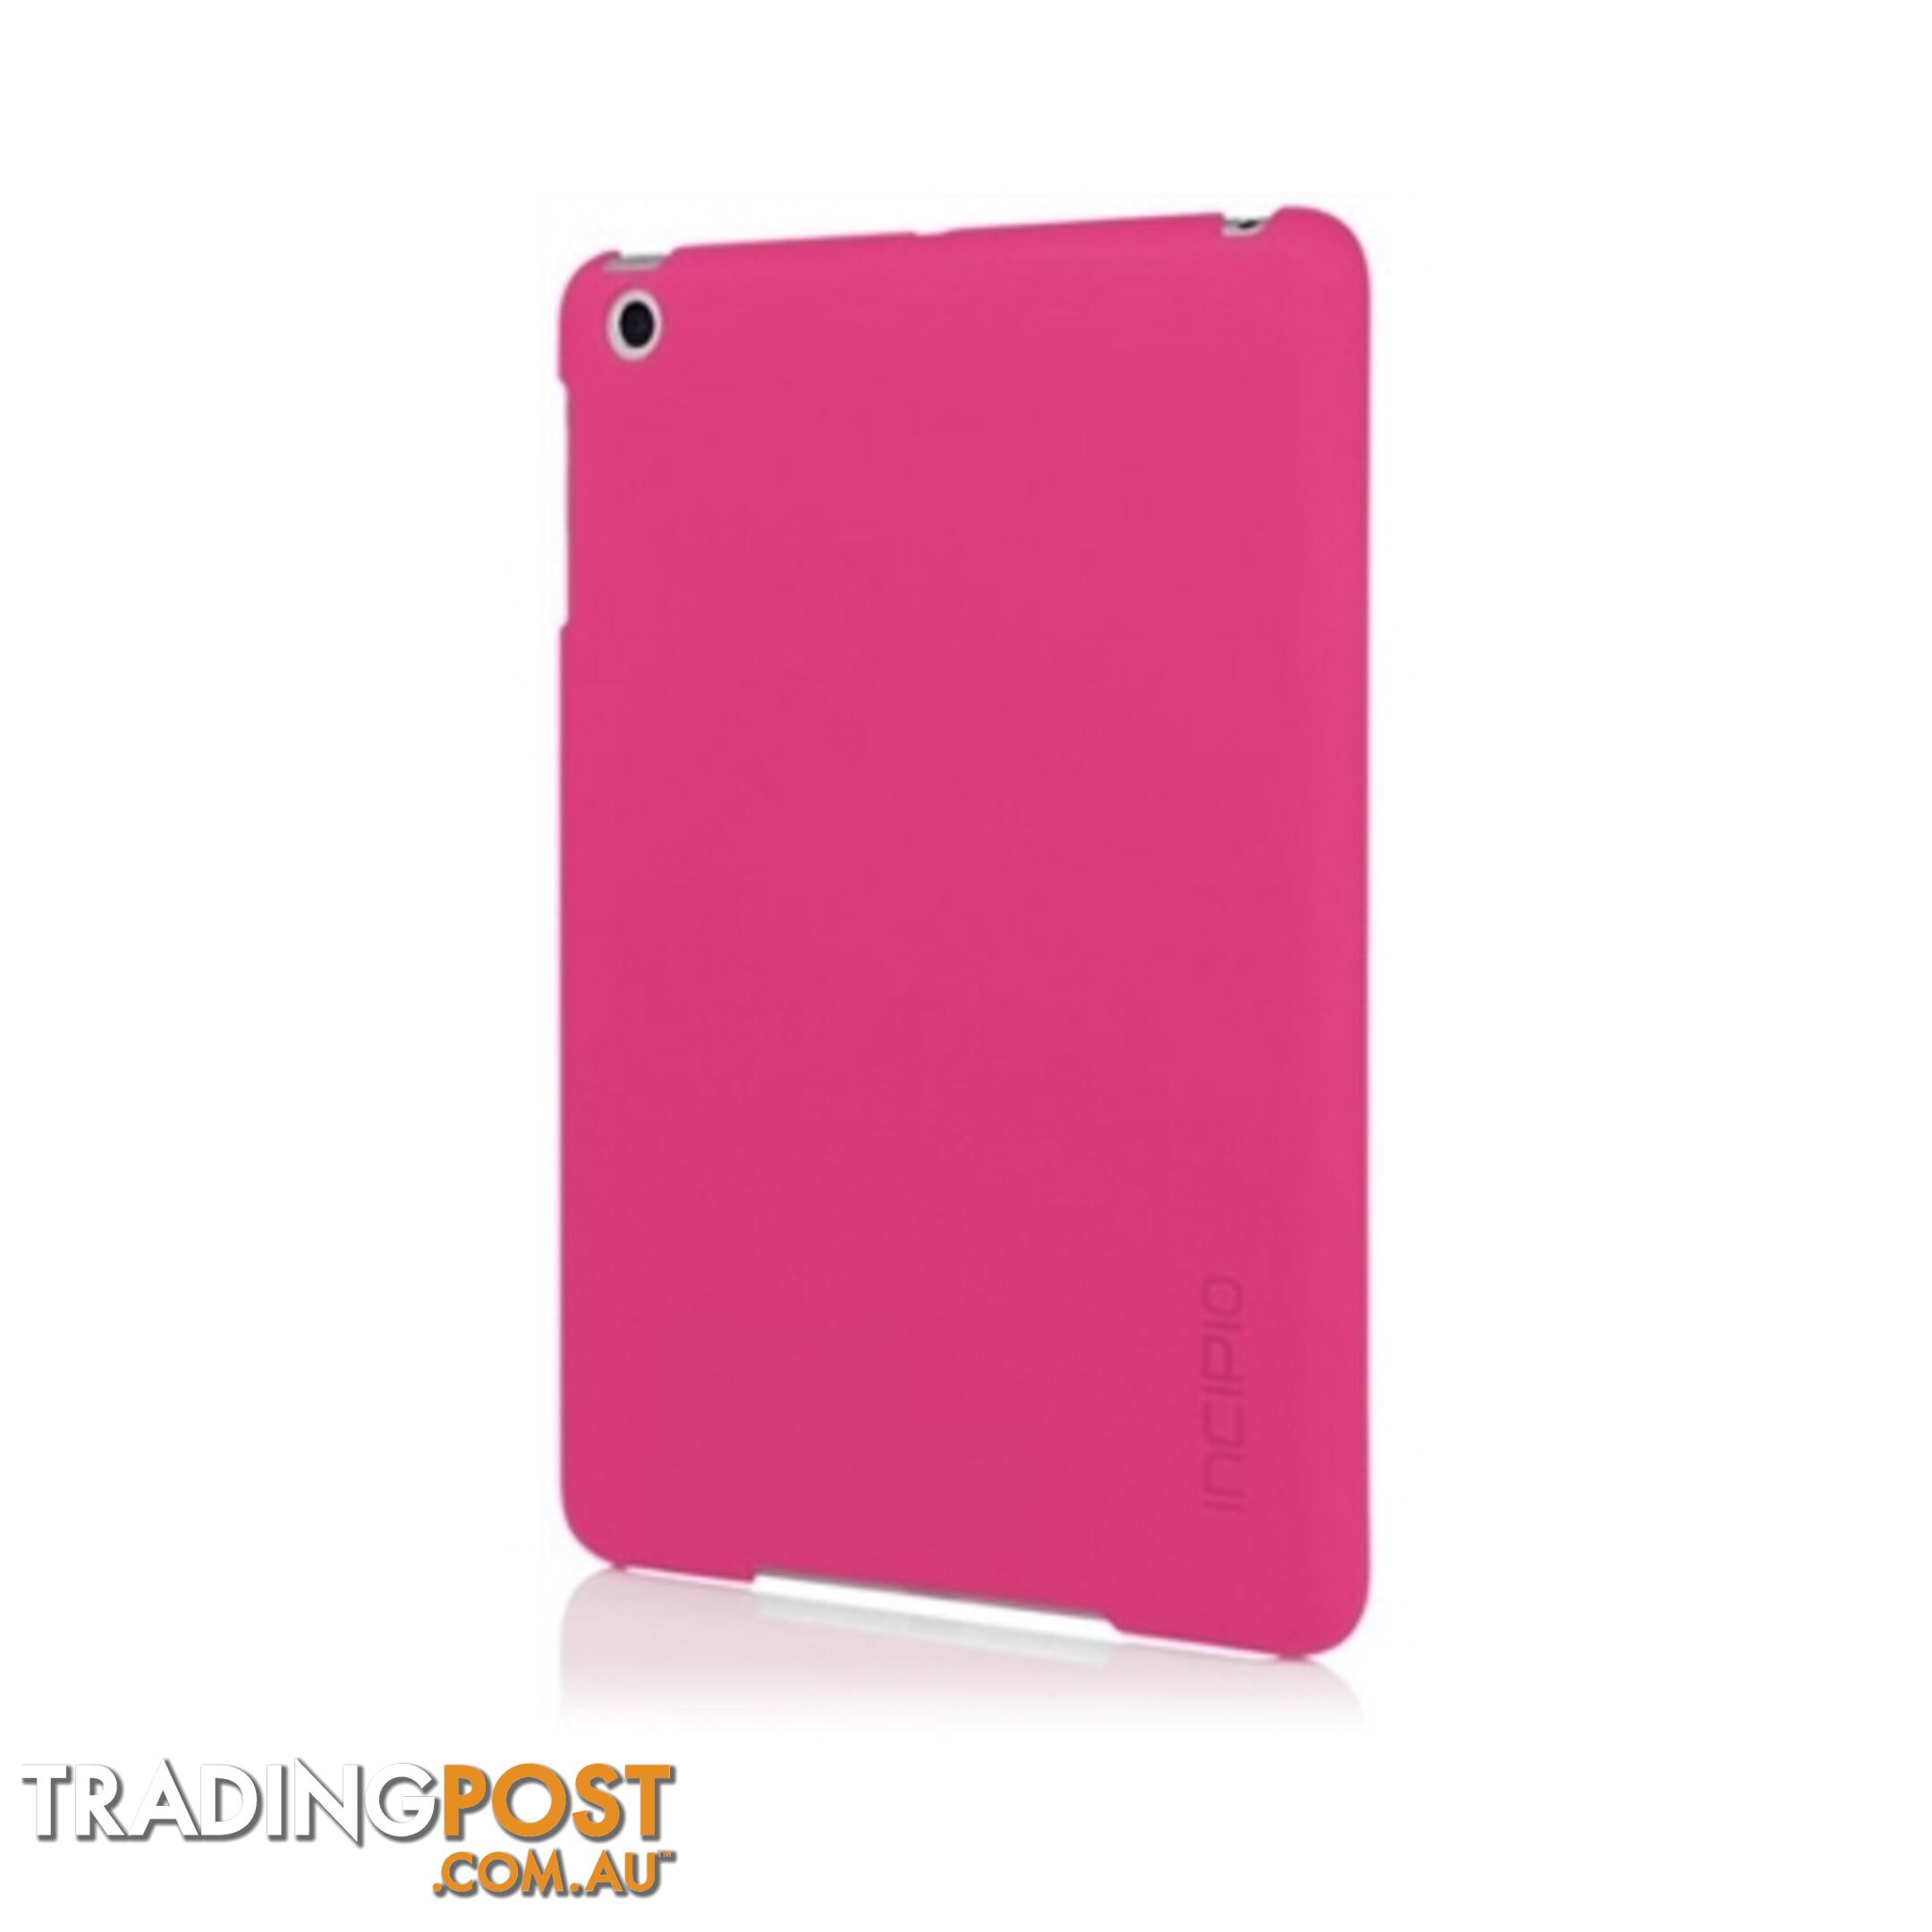 Incipio Feather iPad Mini Case Ultra Thin Snap On Case - Cherry Blossom Pink - 814523352962/IPAD-296 - Incipio